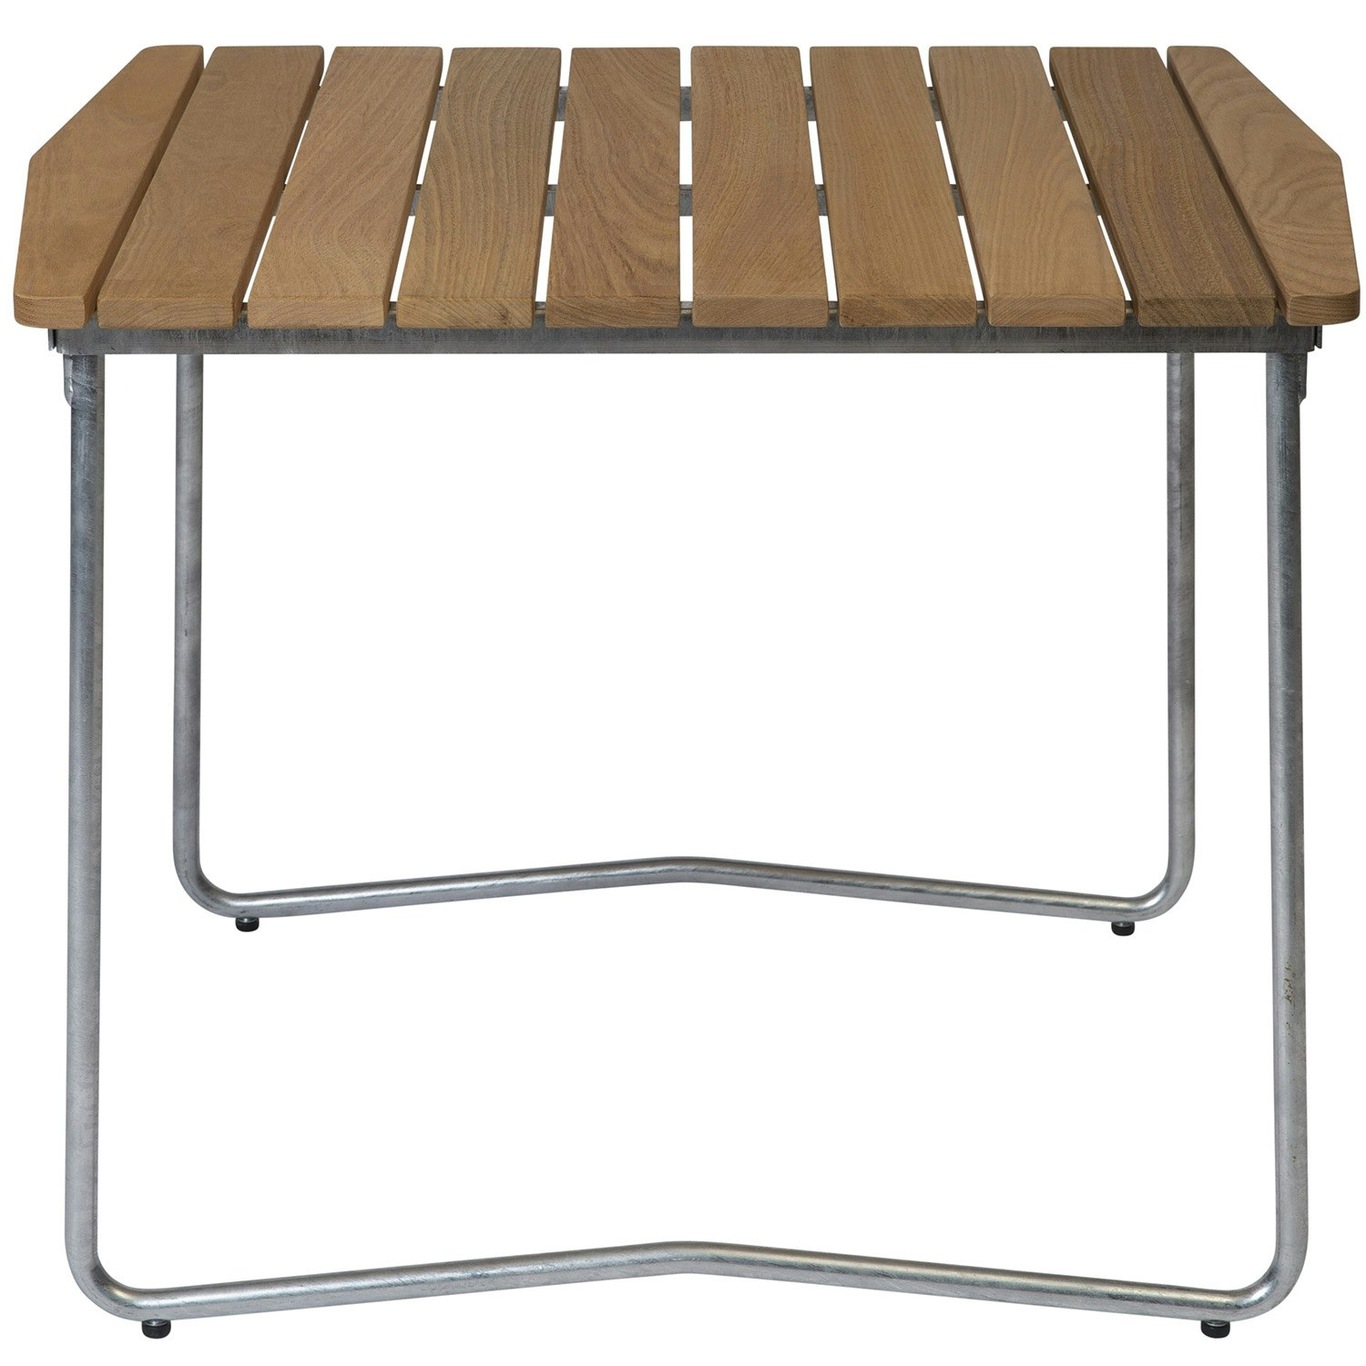 B31 Table 84x92 cm, Oiled Oak / Hot Galvanized Steel